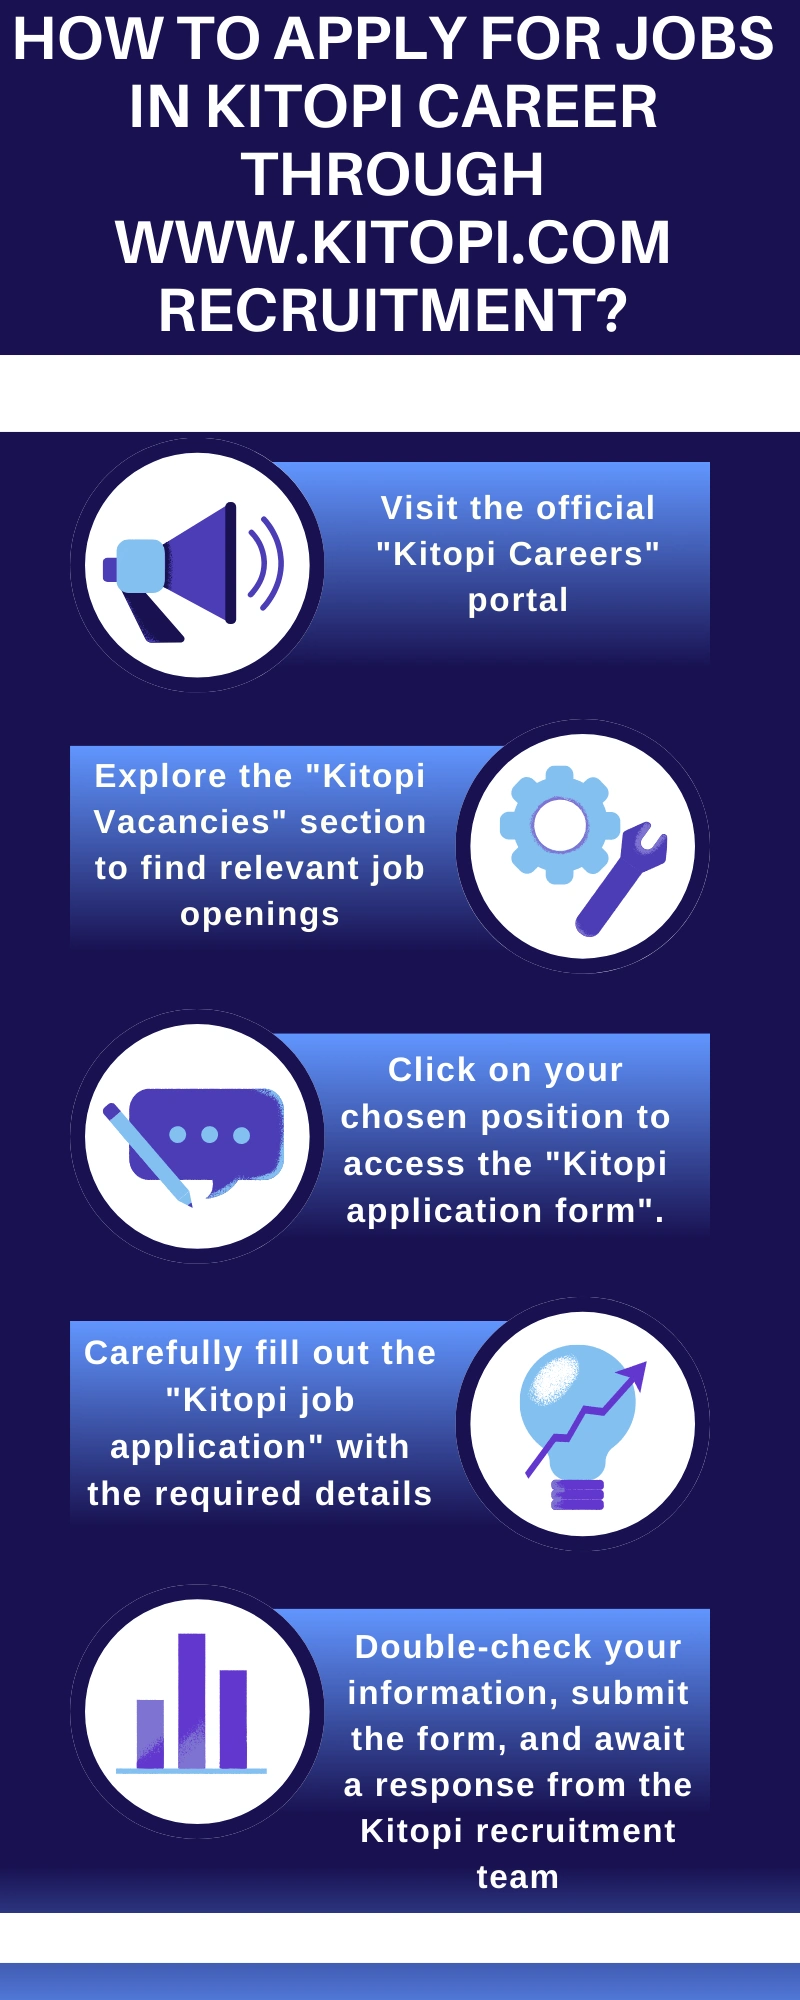 How to Apply for Jobs in Kitopi Career through www.kitopi.com recruitment?